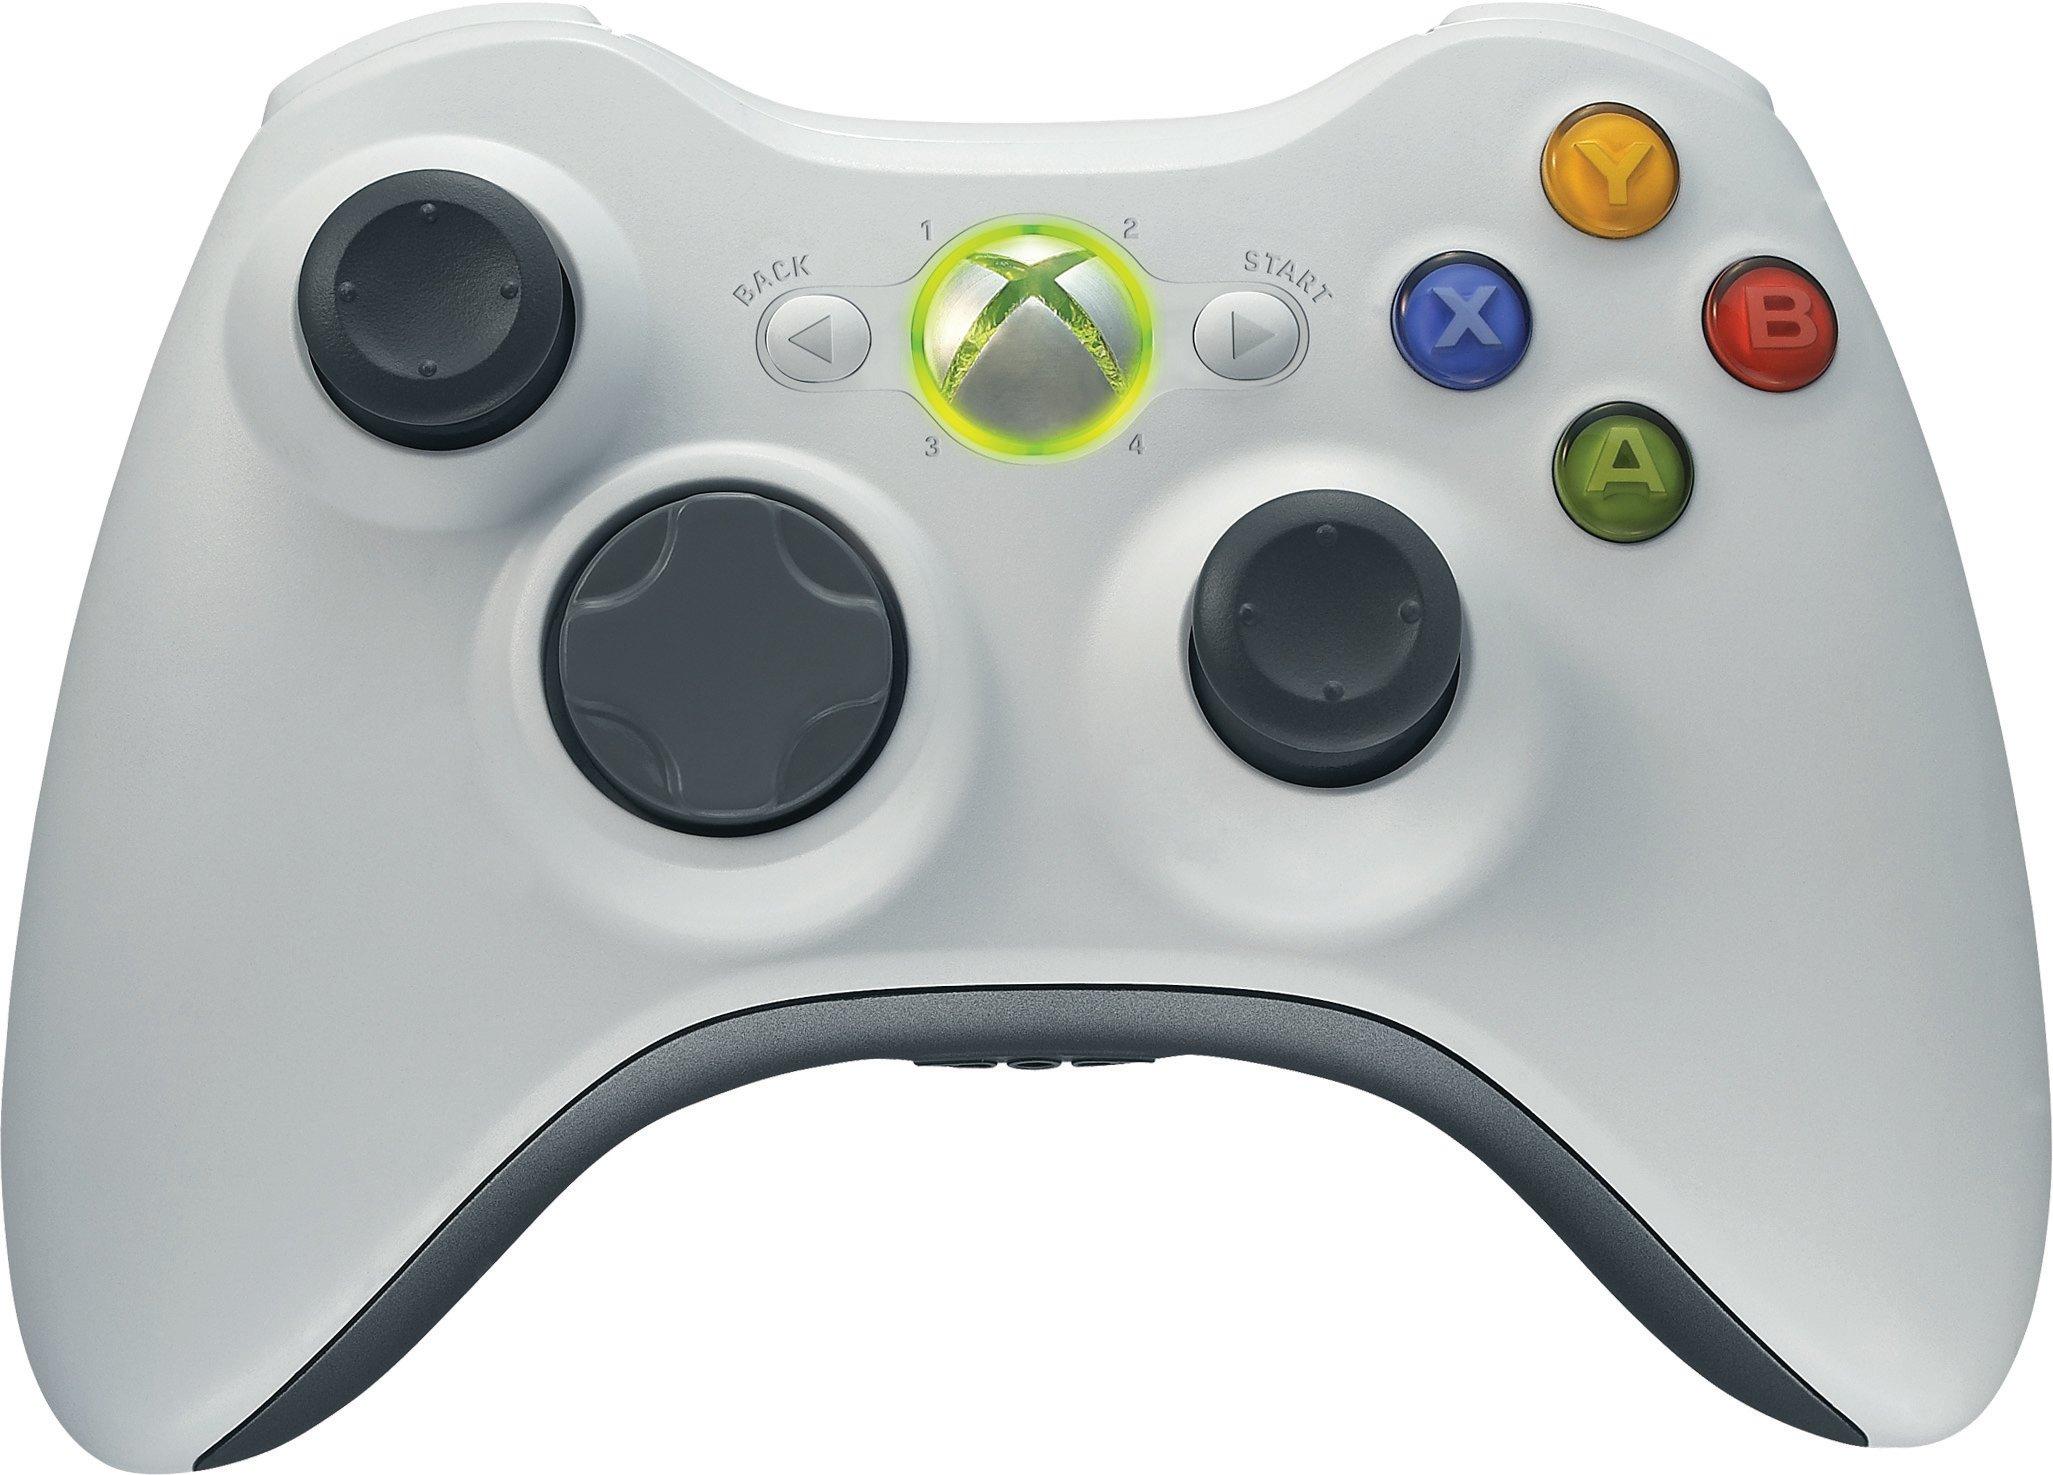 Microsoft-Wireless-Controller-for-Xbox-360